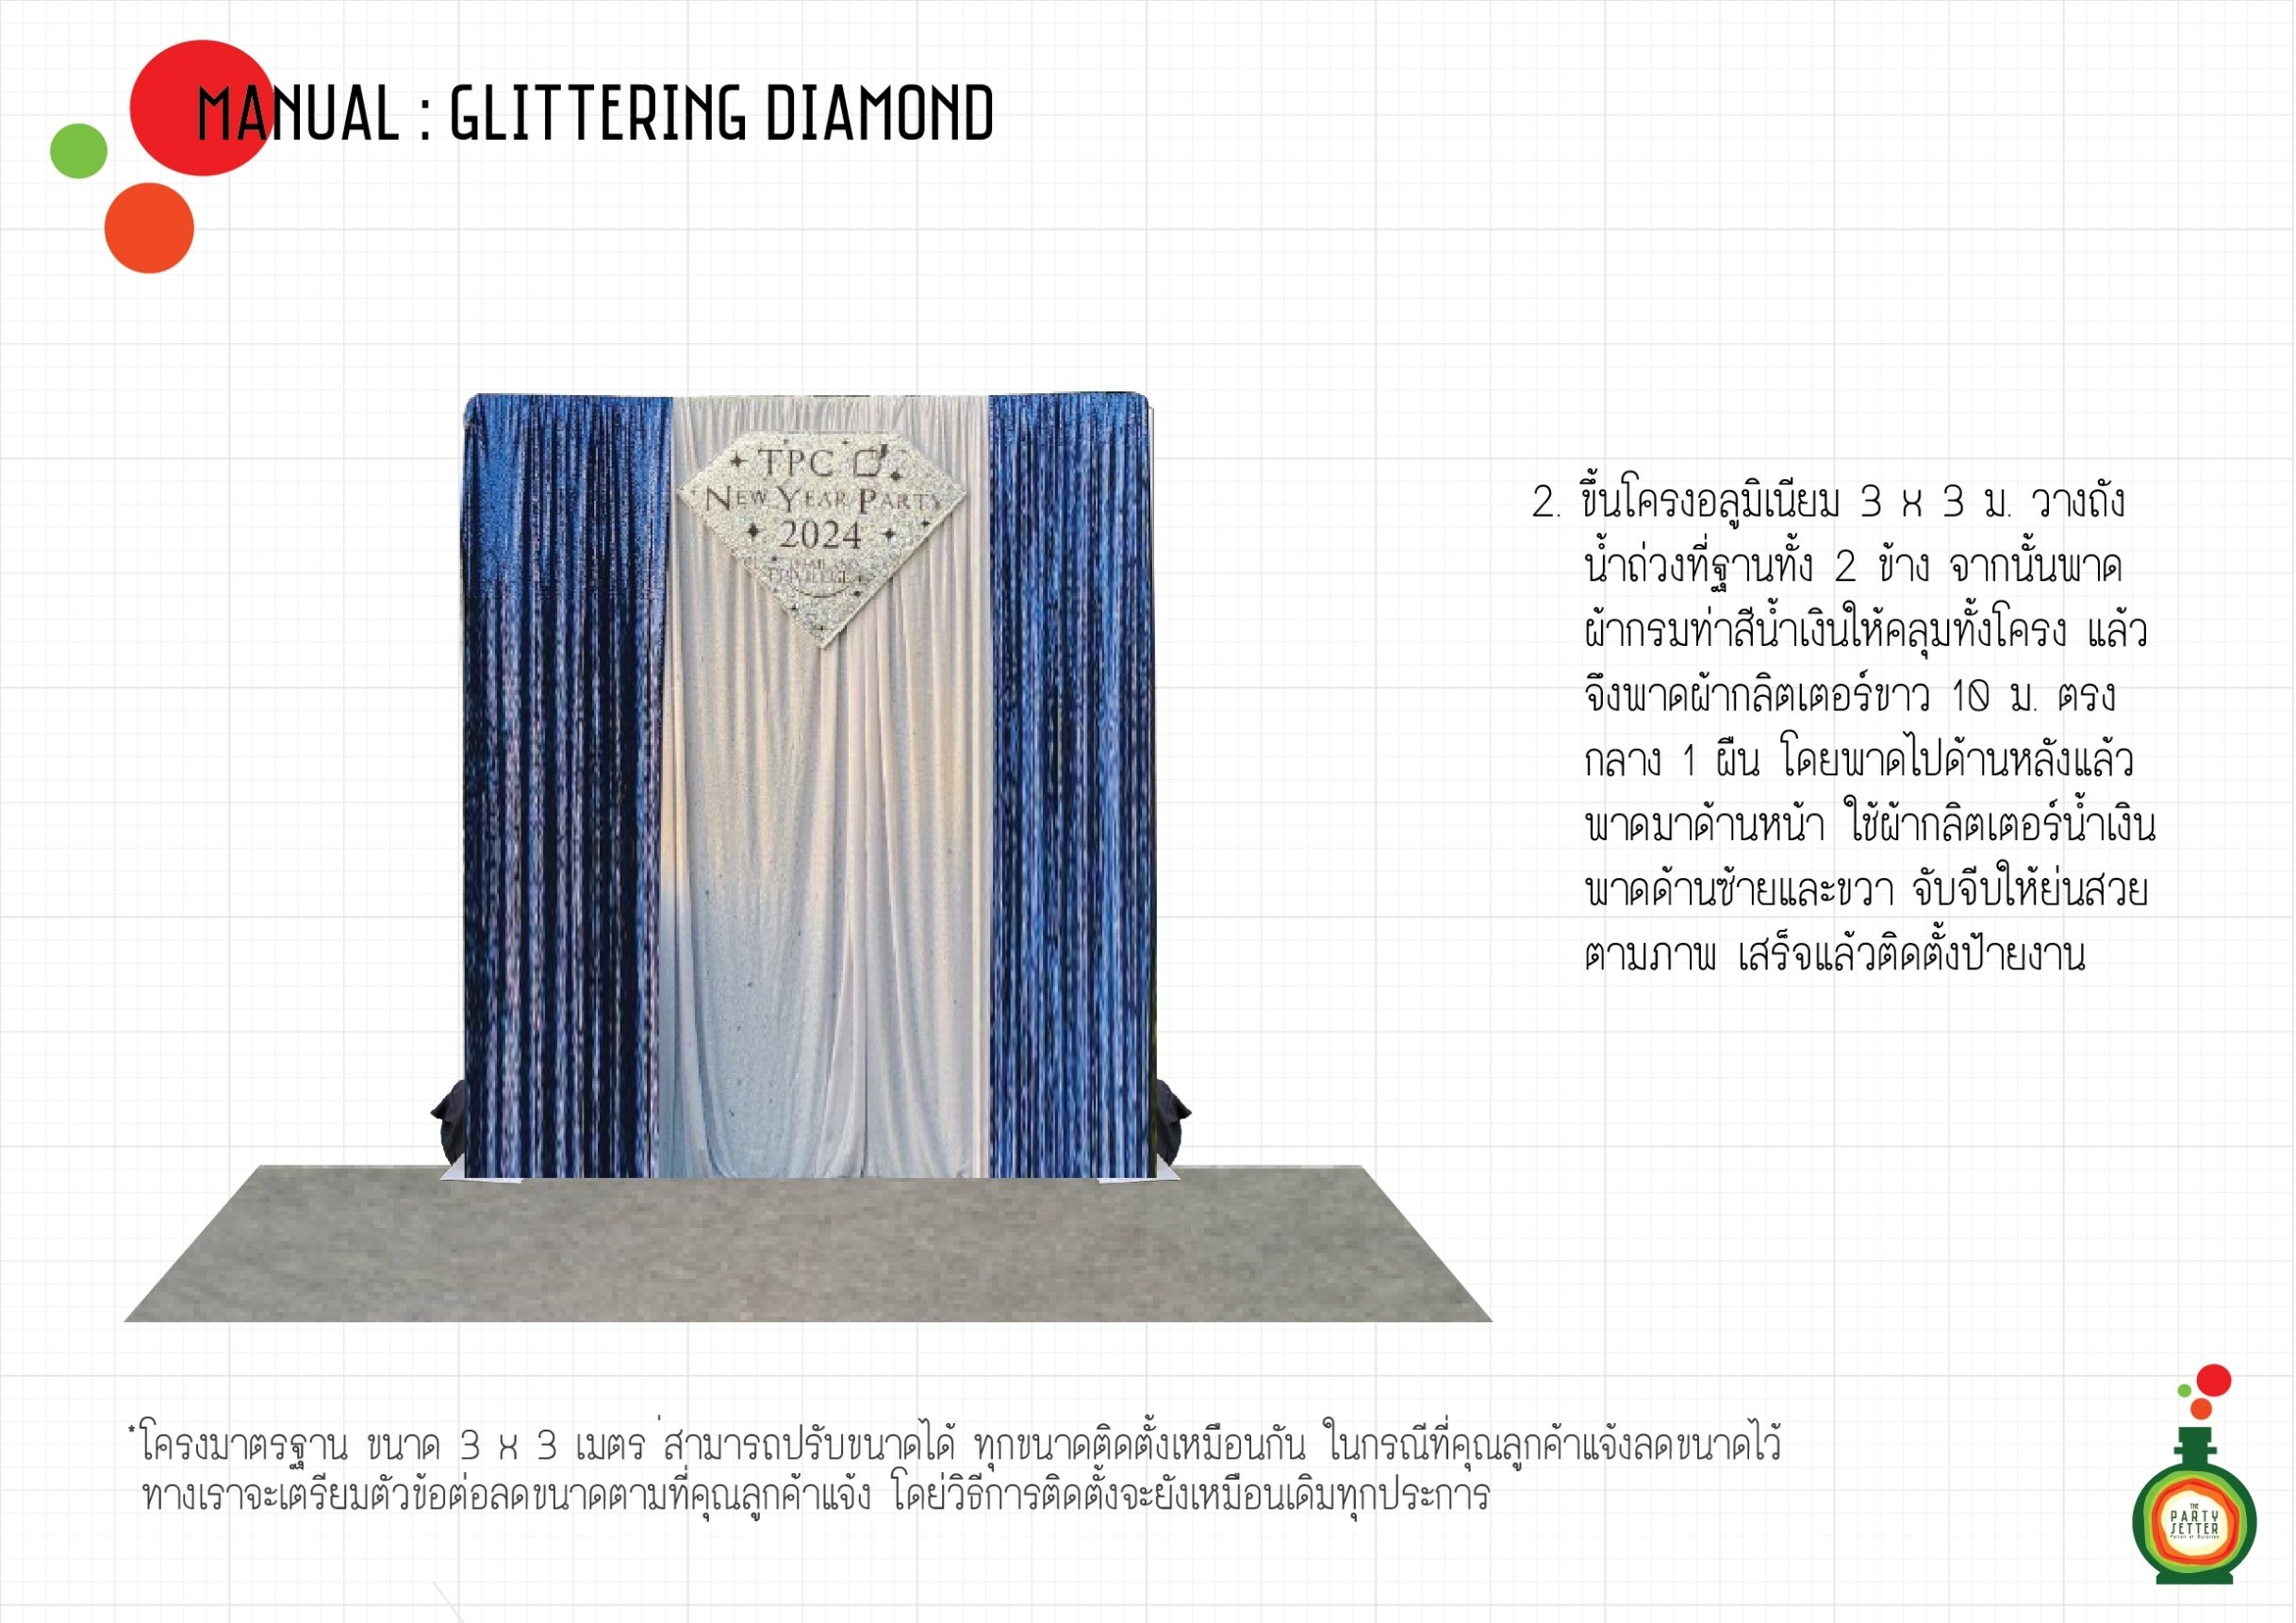 Manual_Glittering Diamond-02-01.jpg